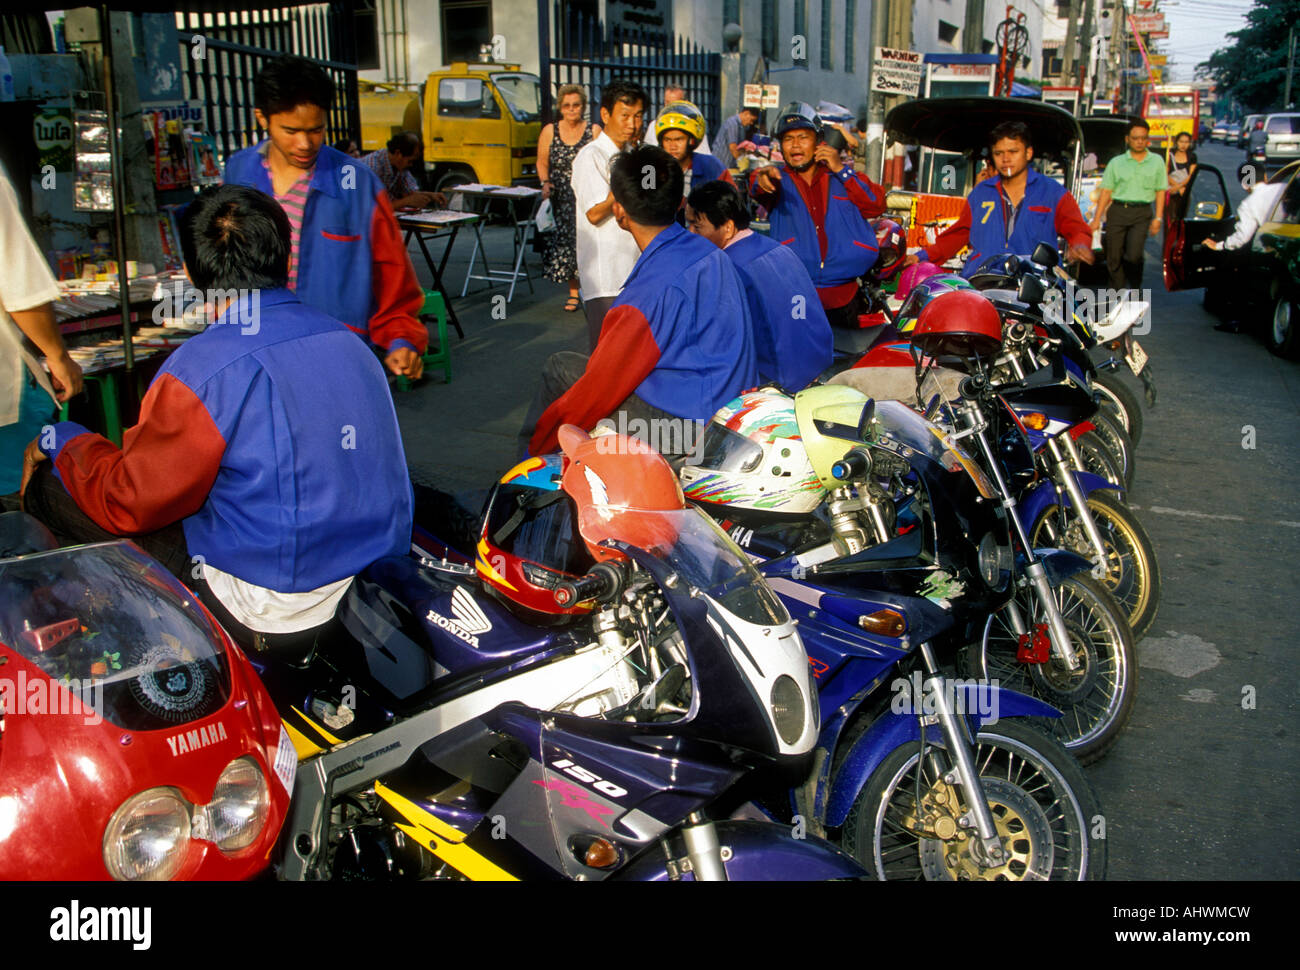 Motorcycle parking Bangkok Bangkok Province Thailand Asia Stock Photo